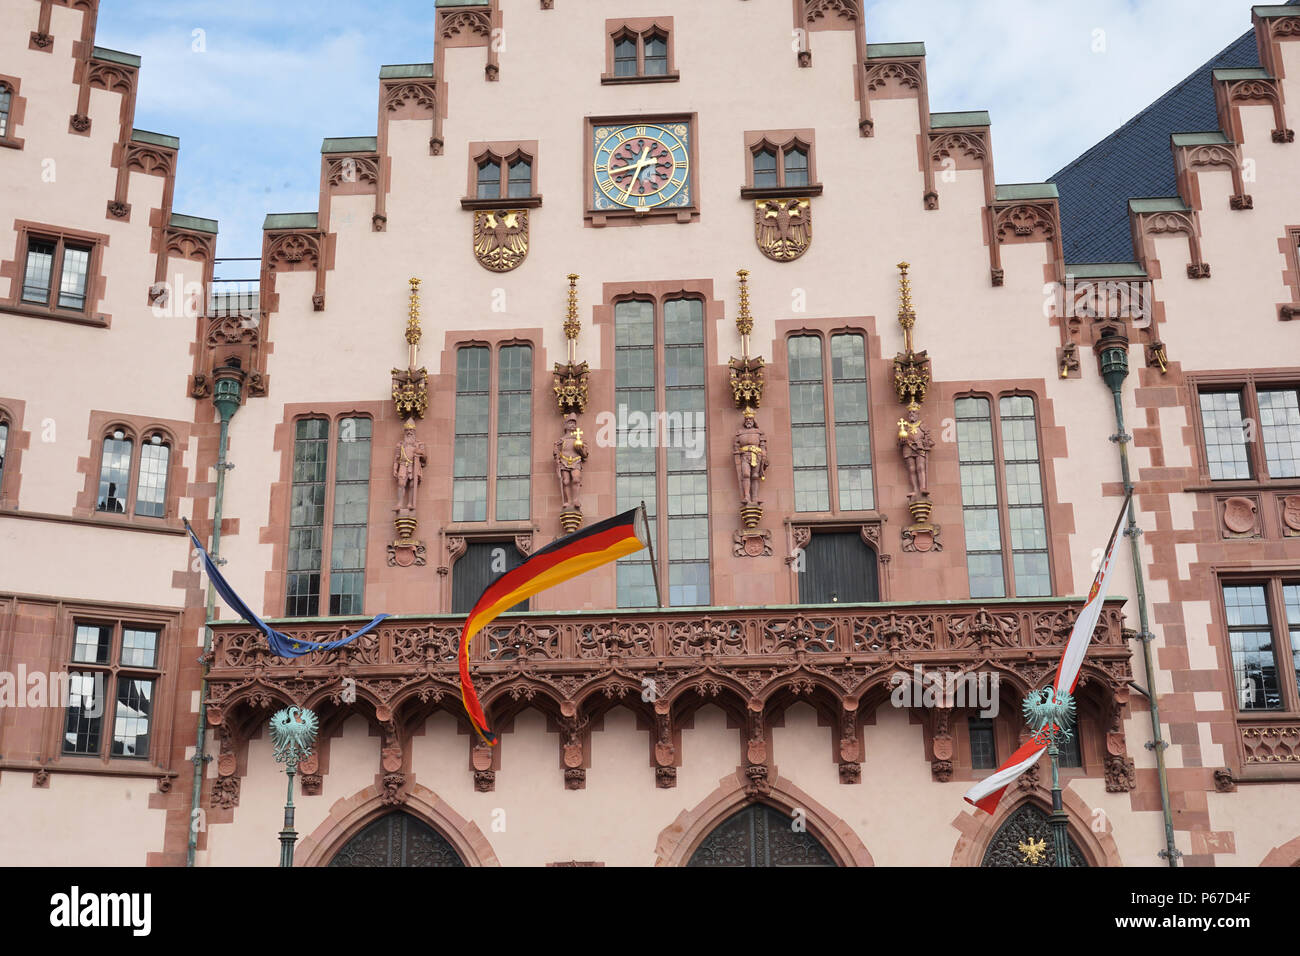 Fassade, Rathaus Römer, Römerberg, el casco antiguo, el Centro Histórico, Frankfurt am Main, Alemania Foto de stock